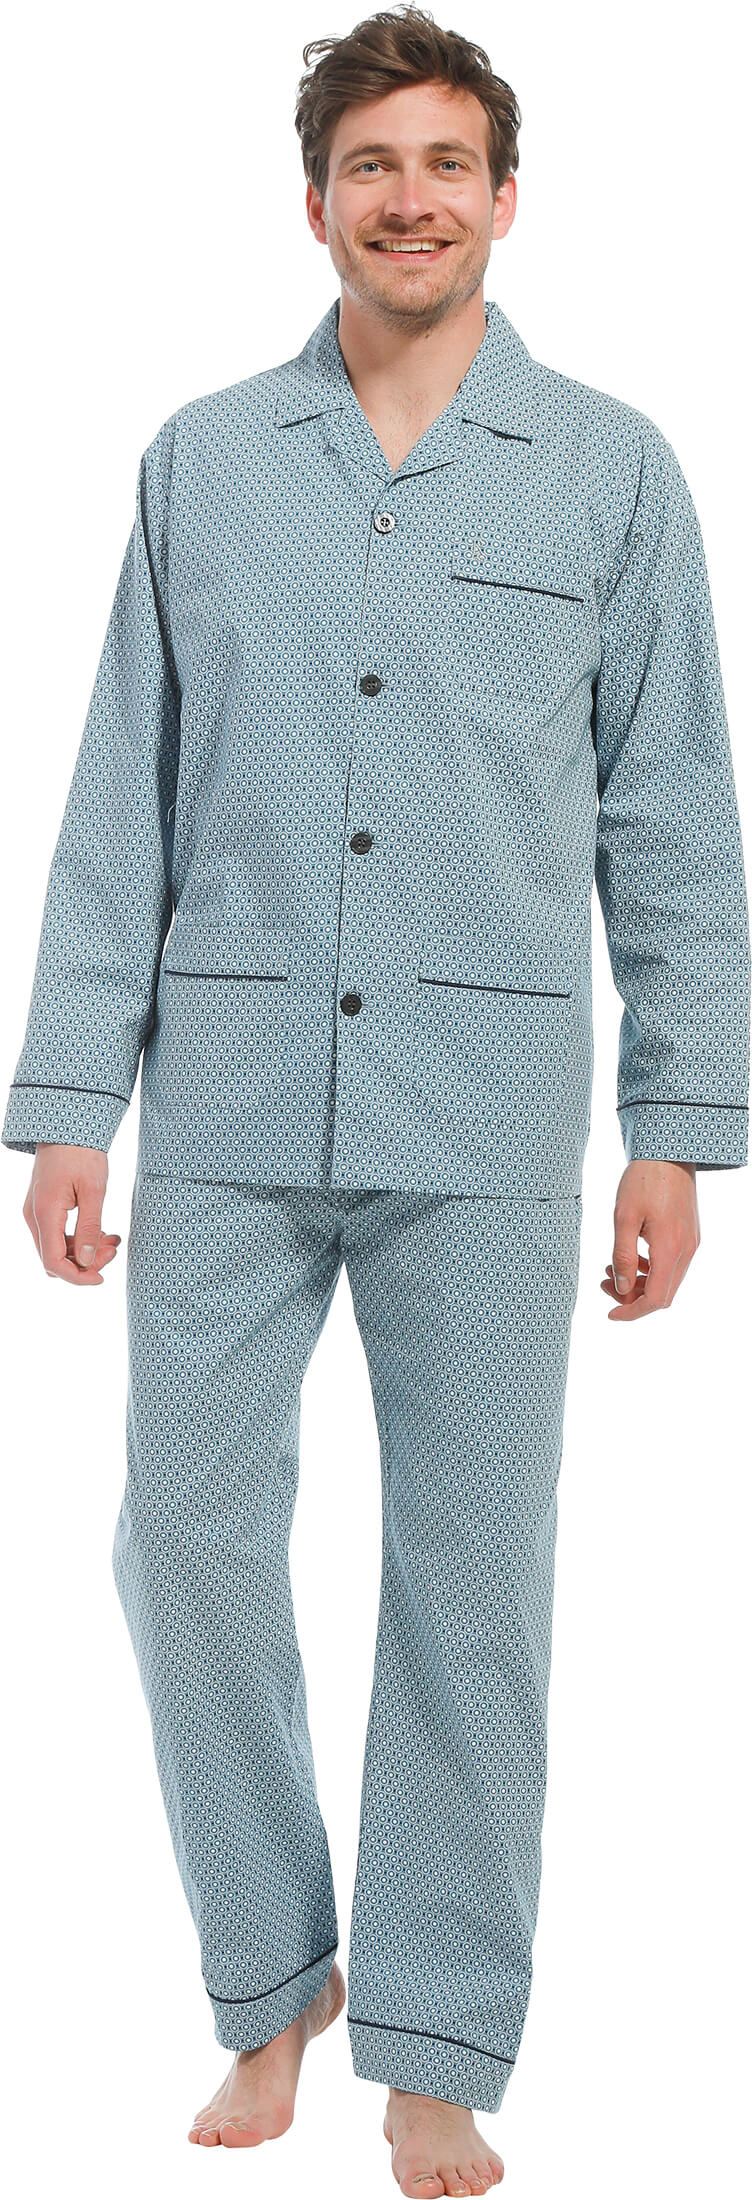 Pyjama  27221-700-6 512 Turquoise